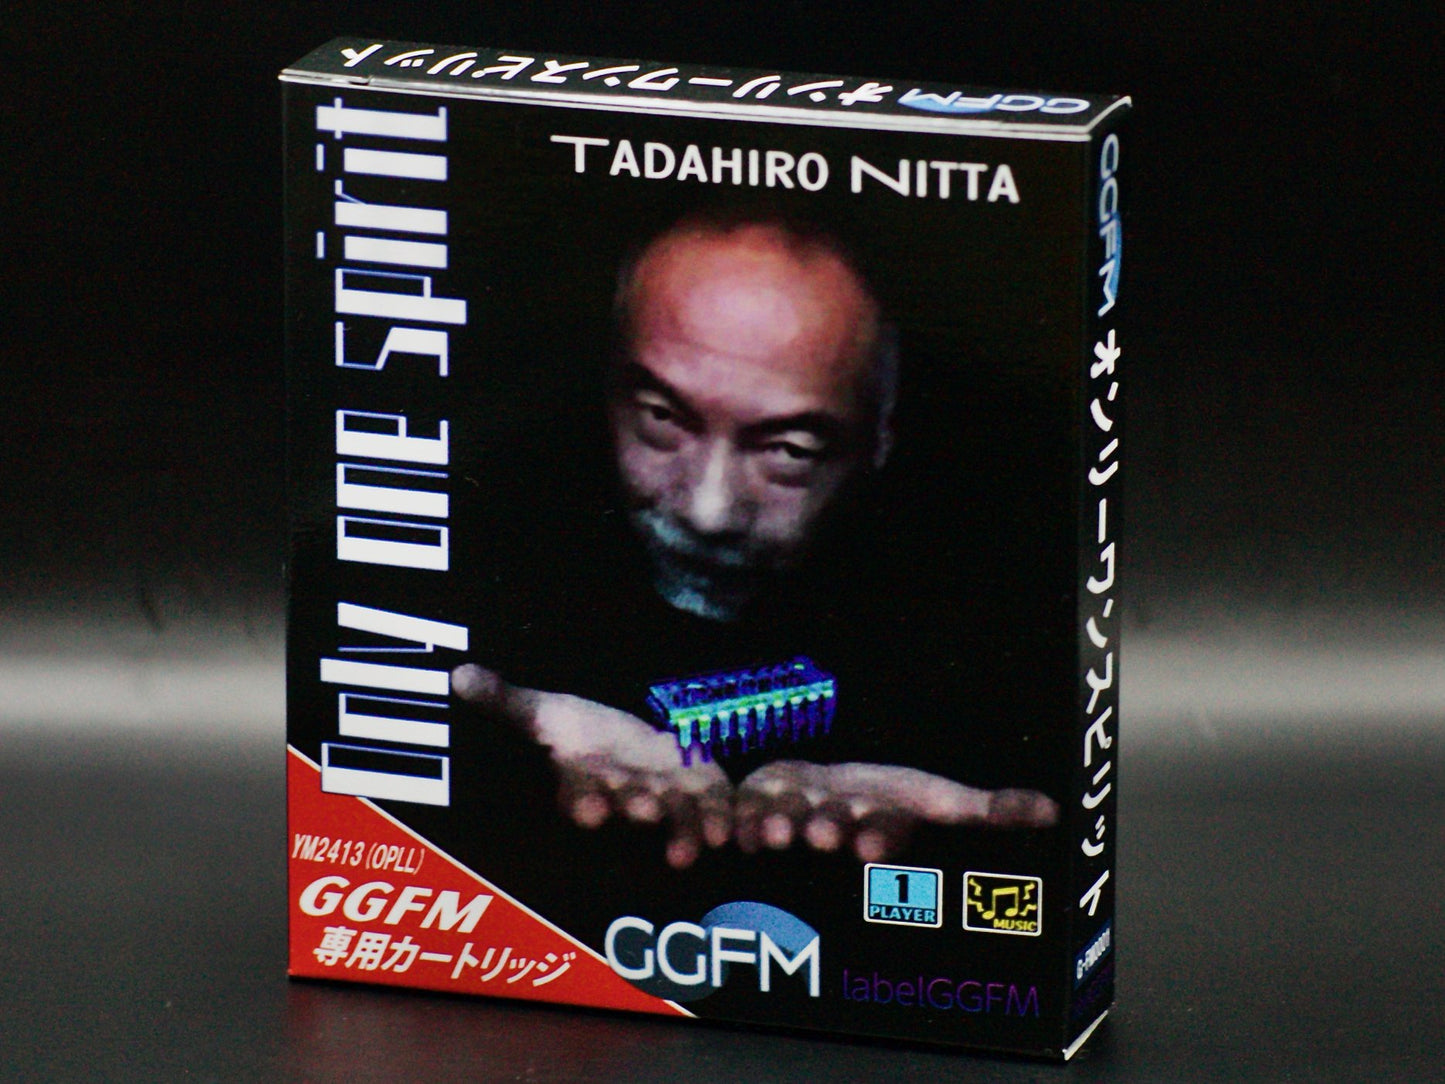 labelGGFM - Only one spirit by Tadahiro Nitta